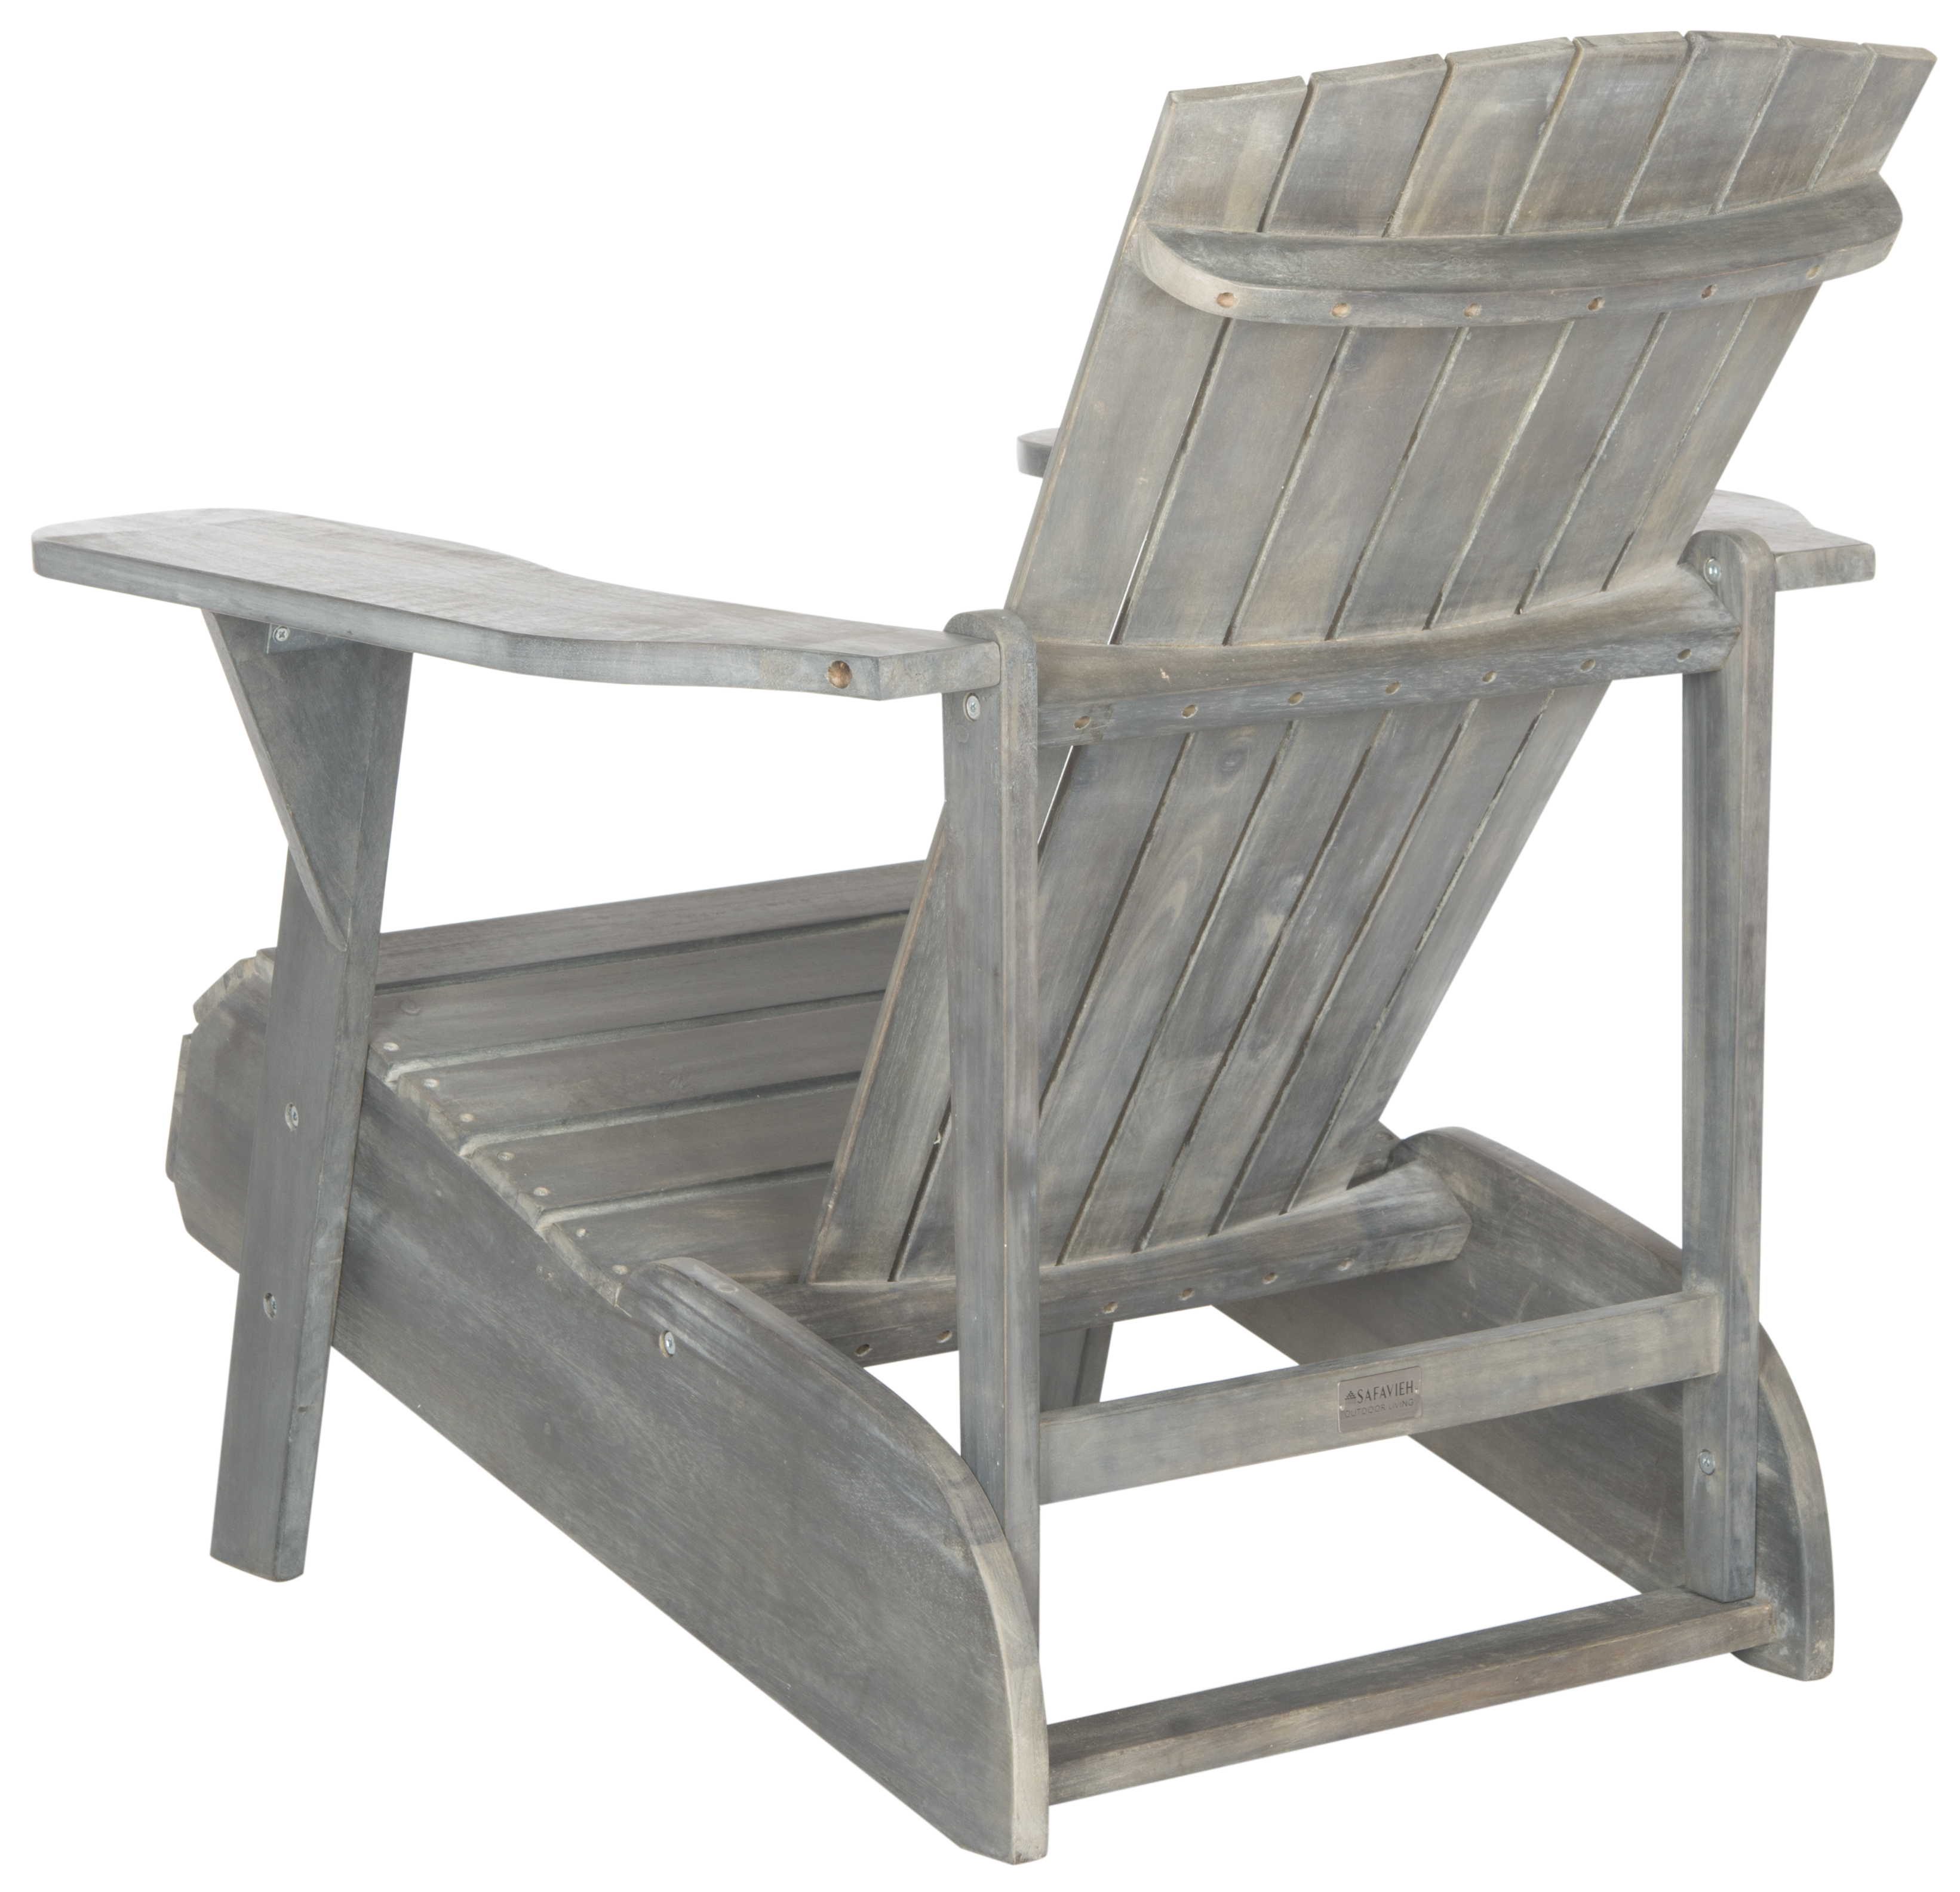 Safavieh Vista Outdoor Contemporary Adirondack Chair, Ash Gray - image 4 of 6